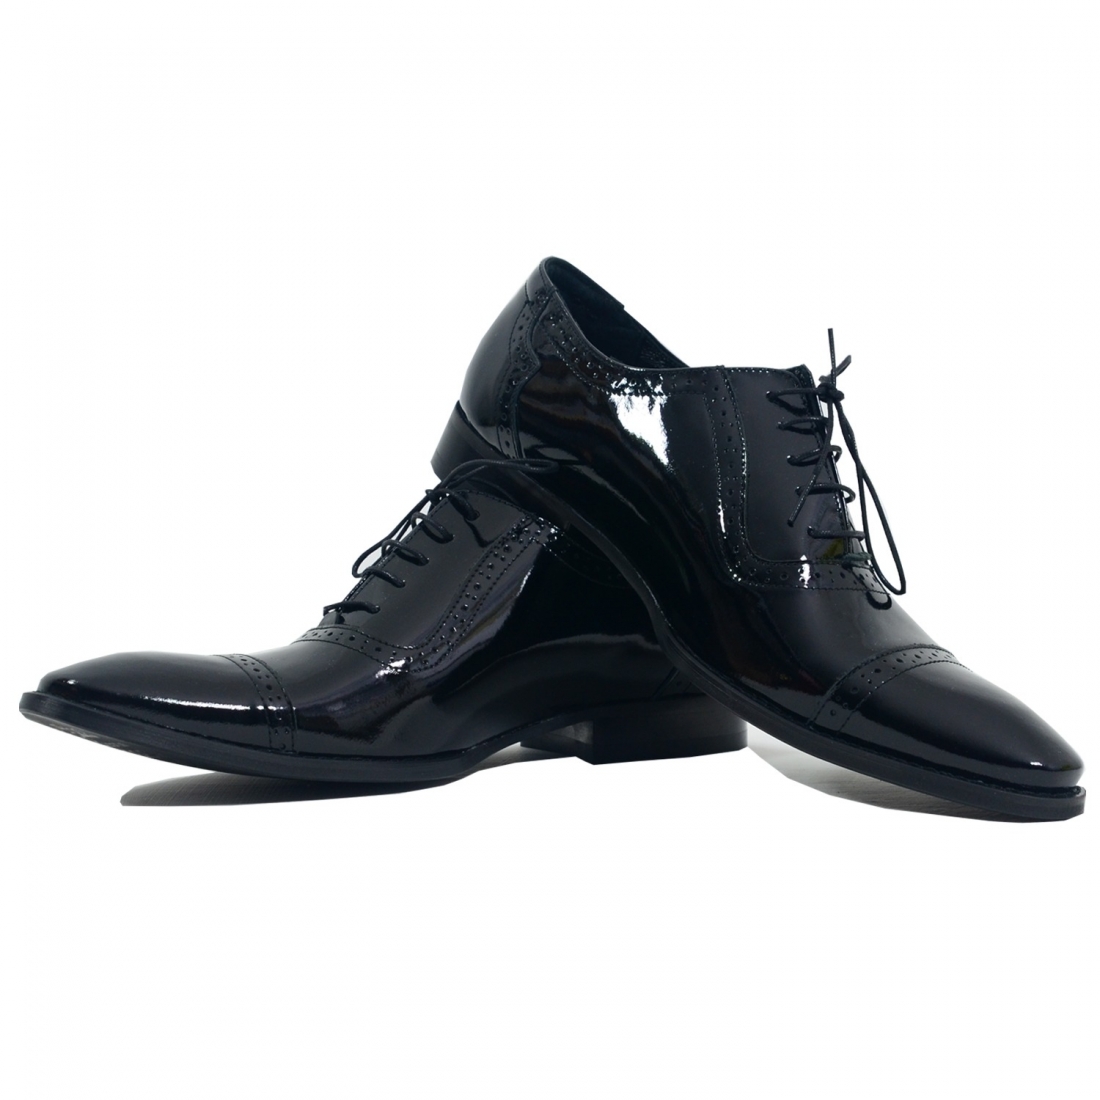 Modello Atmoe - Scarpe Classiche - Handmade Colorful Italian Leather Shoes